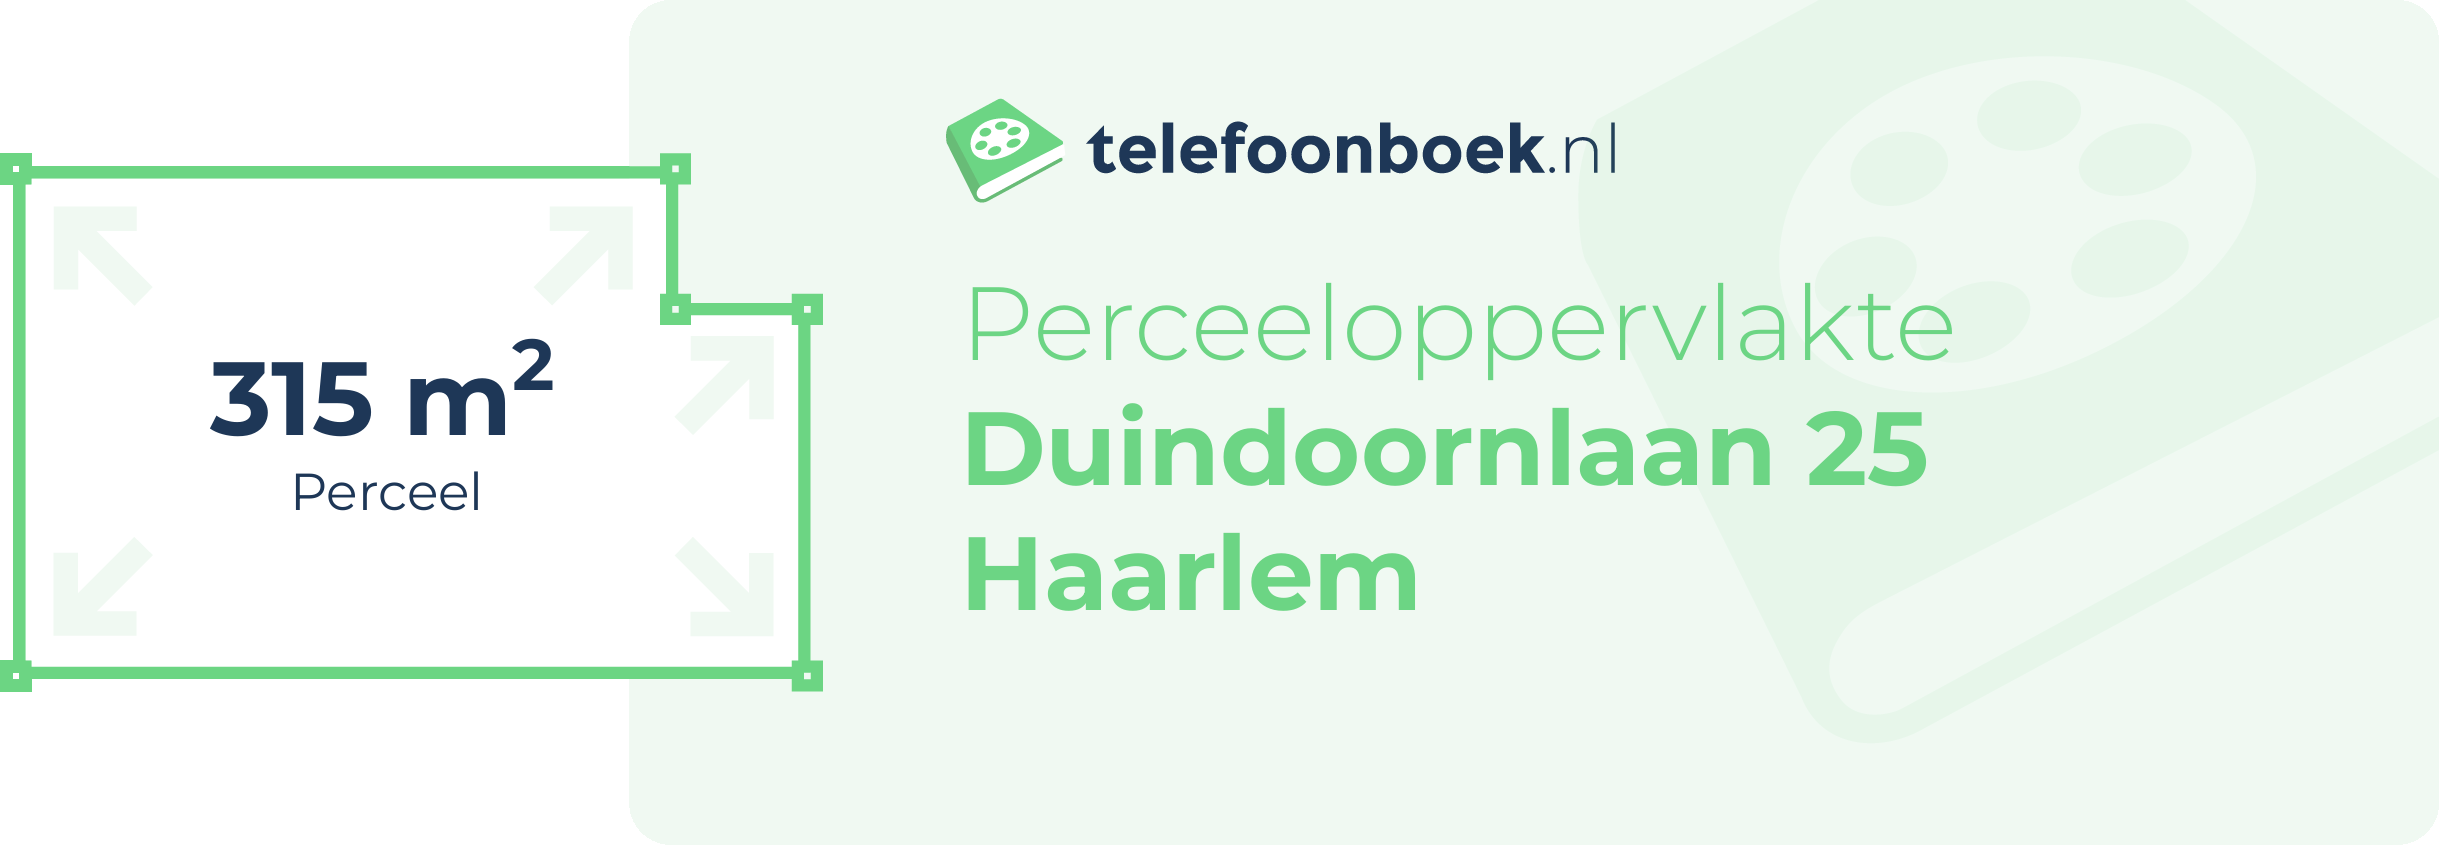 Perceeloppervlakte Duindoornlaan 25 Haarlem